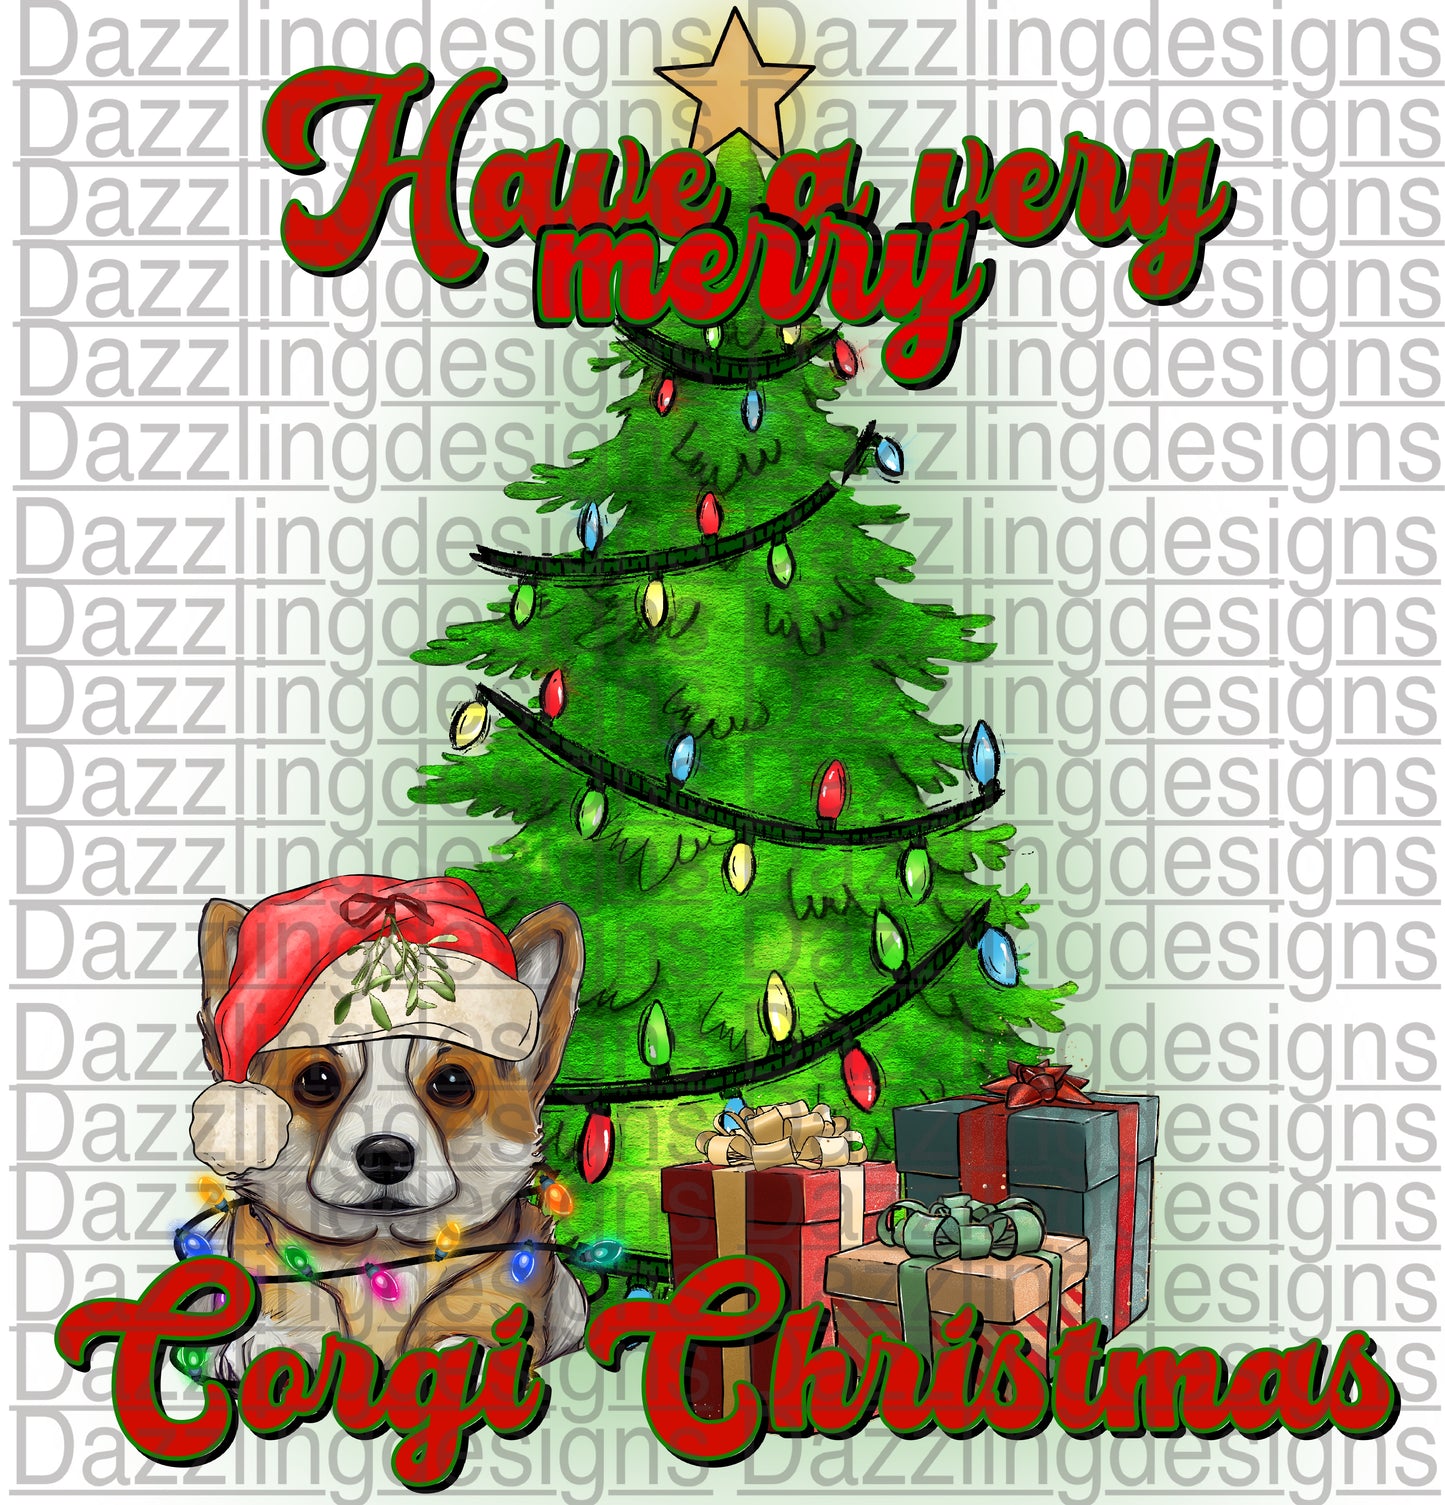 Have a very merry CORGI Christmas